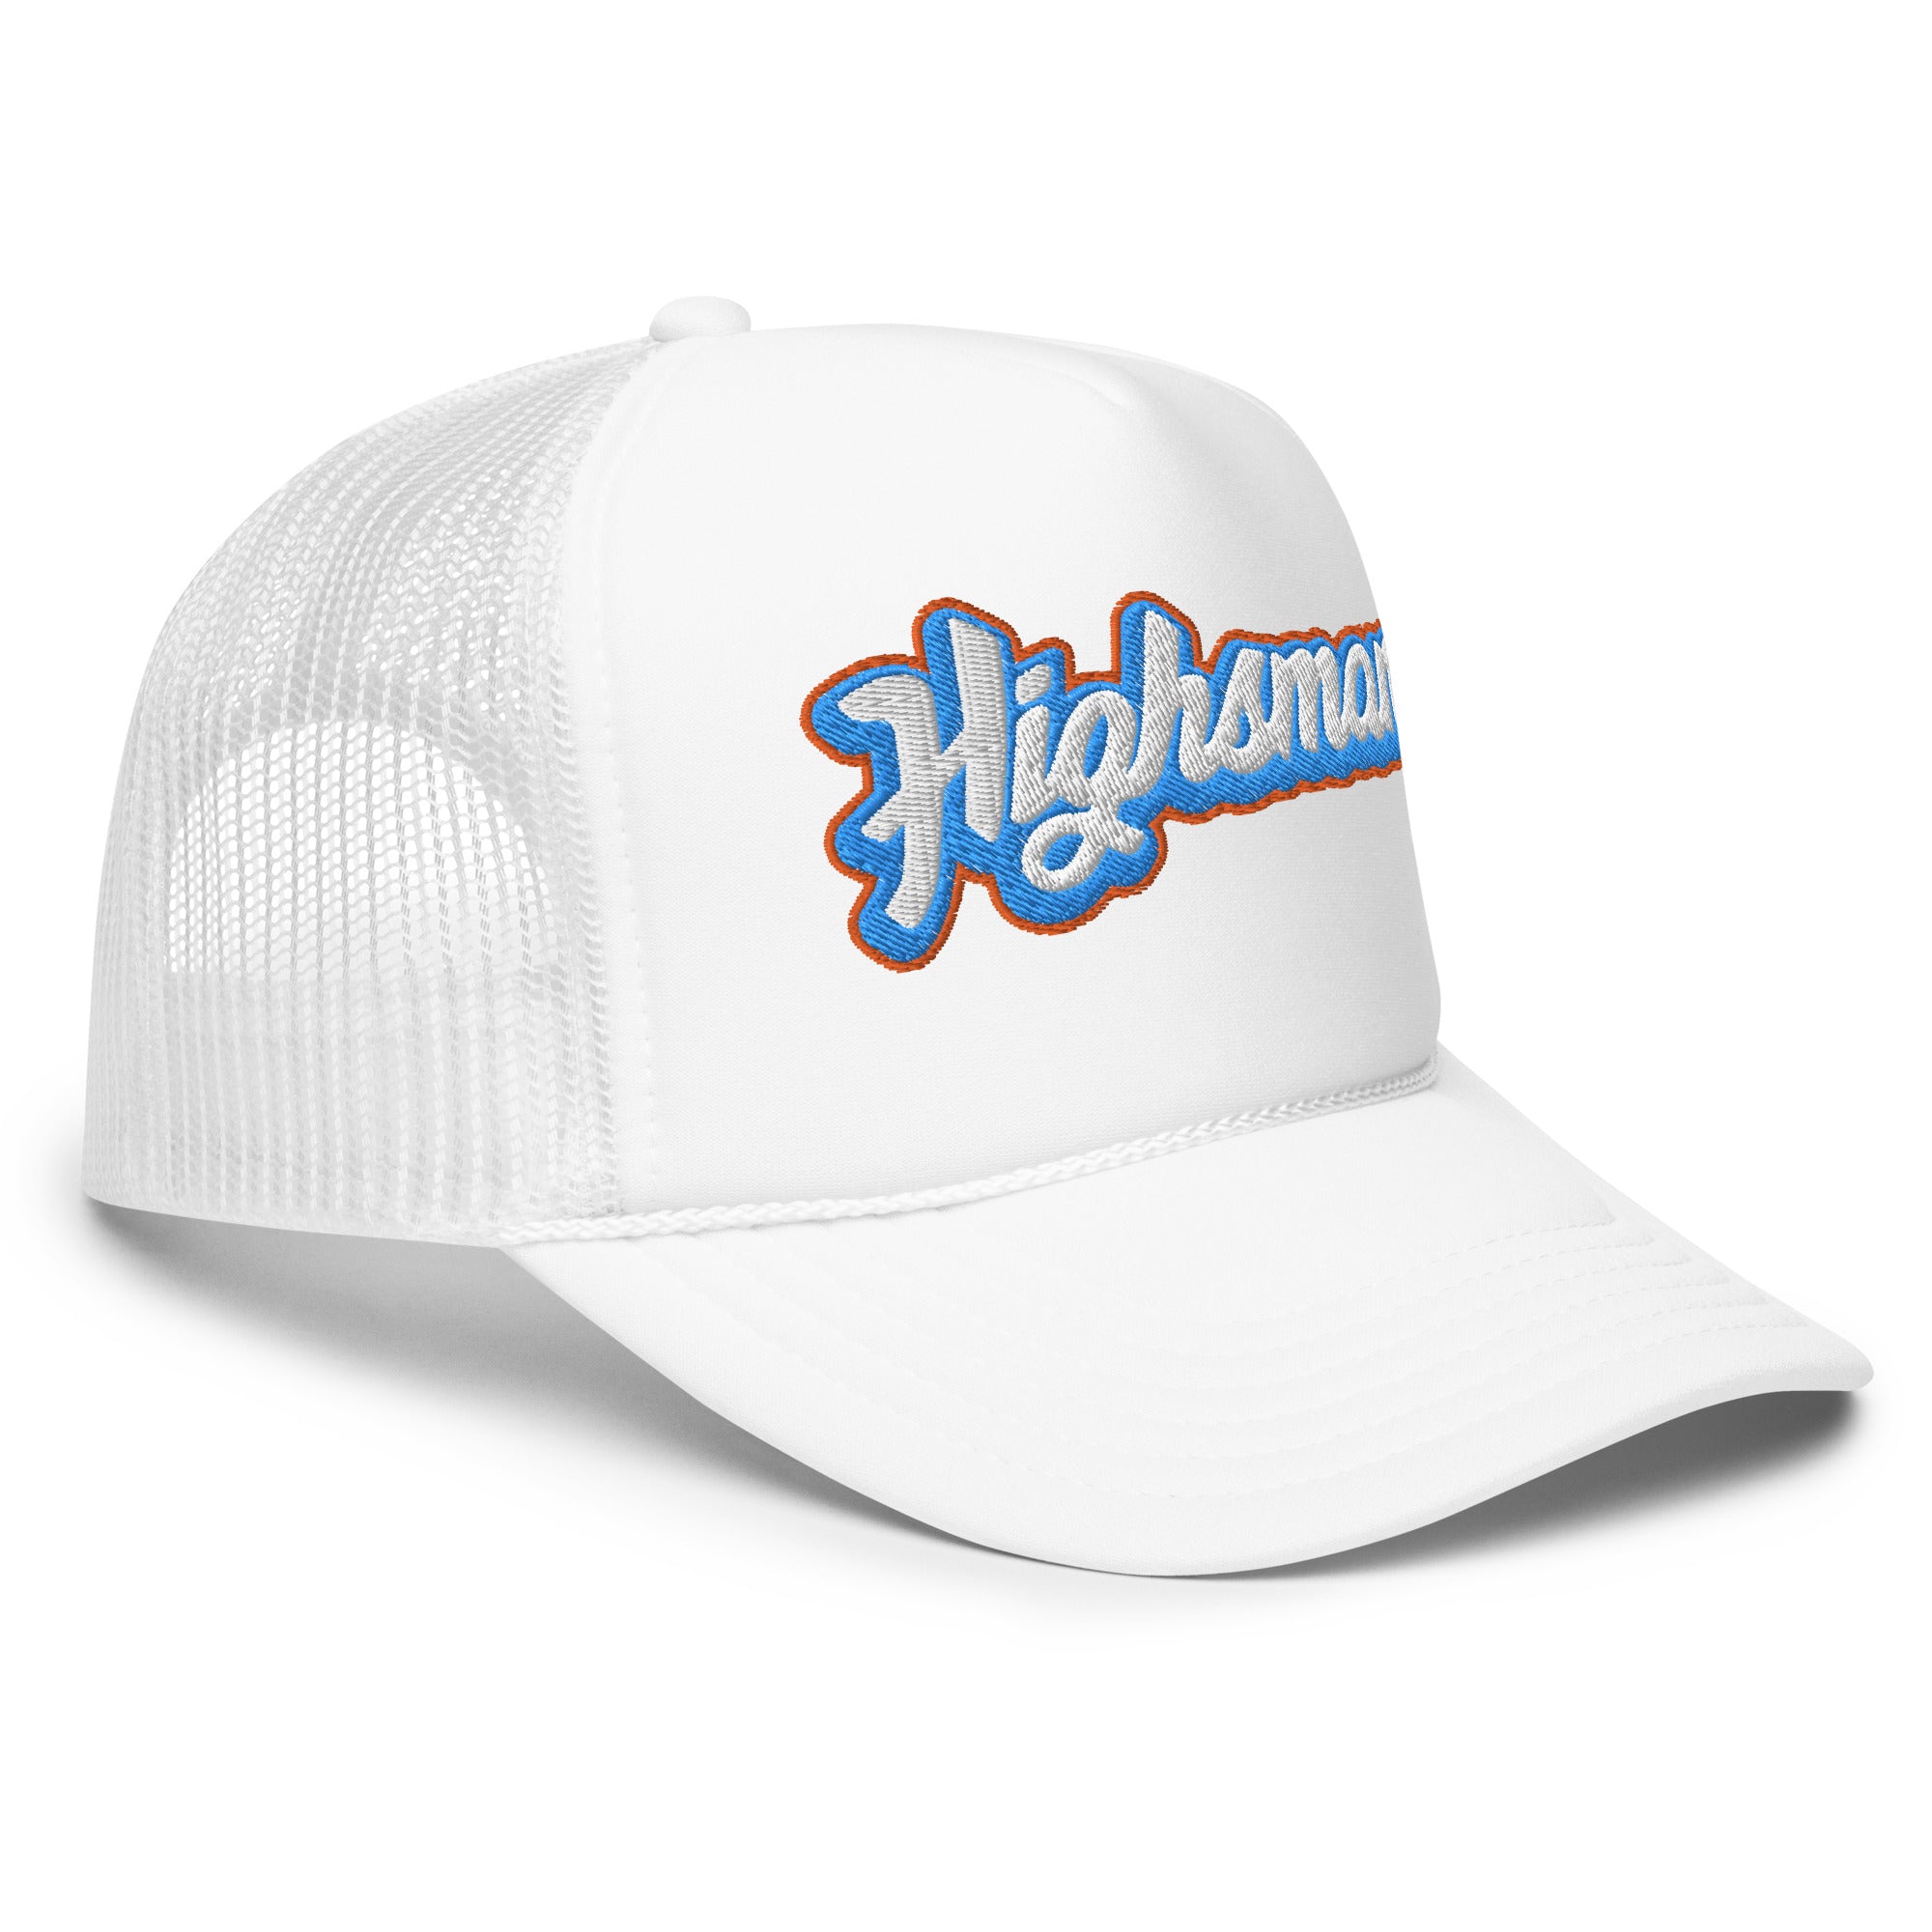 Highsman Miami Trucker Hat